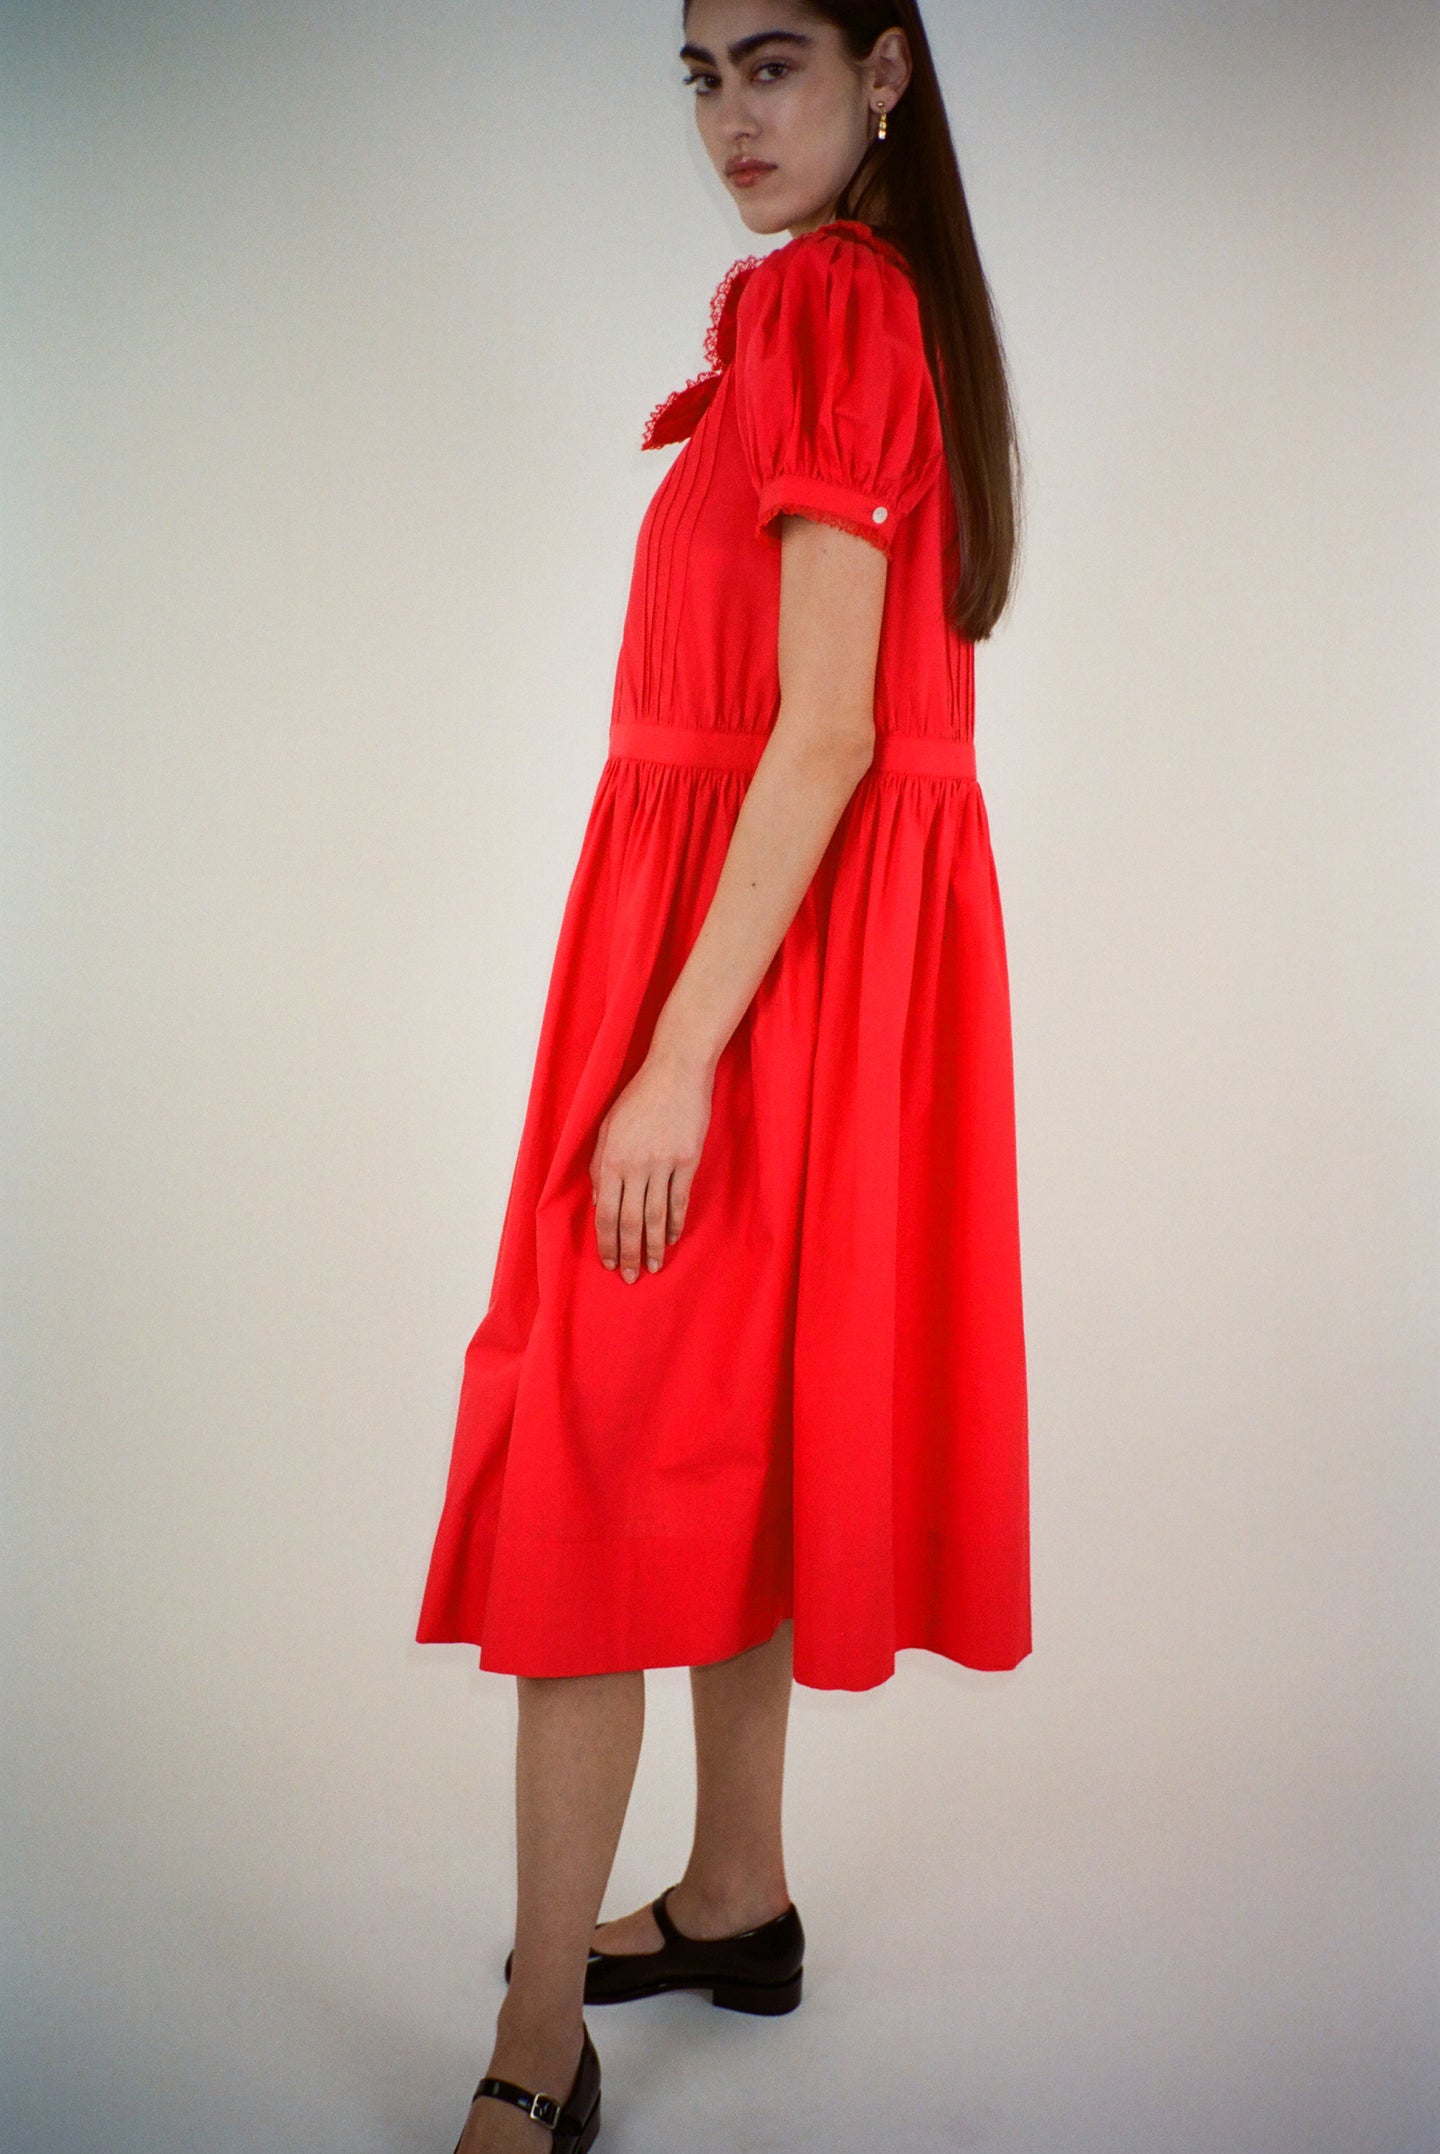 Middy Dress in Red by SANDY LIANG http://www.shoprecital.com